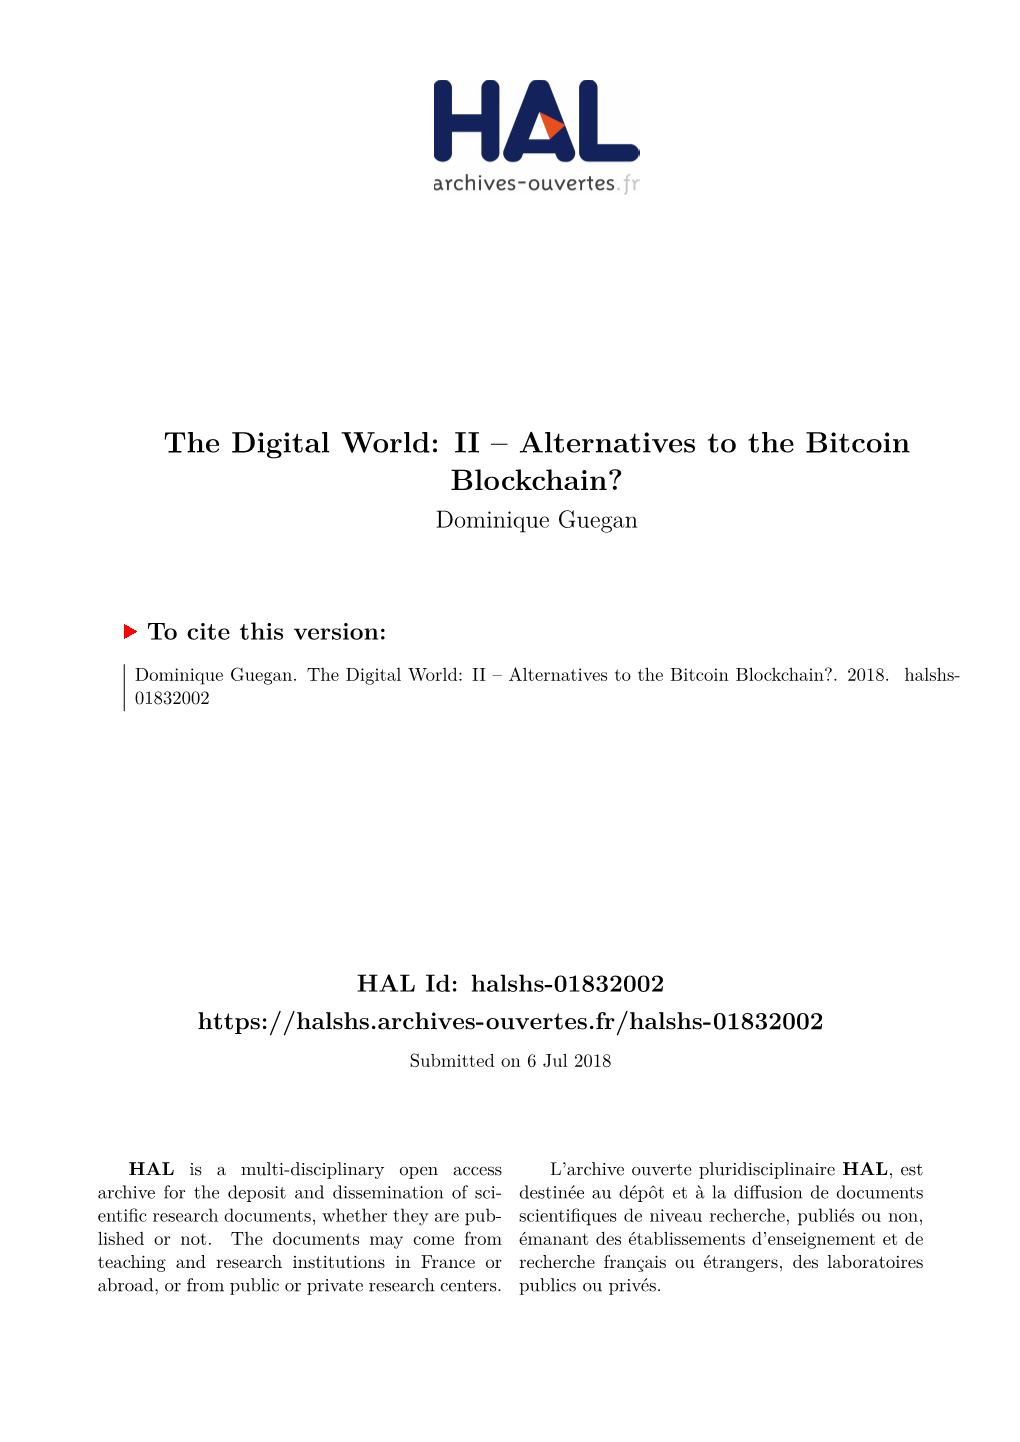 Alternatives to the Bitcoin Blockchain? Dominique Guegan